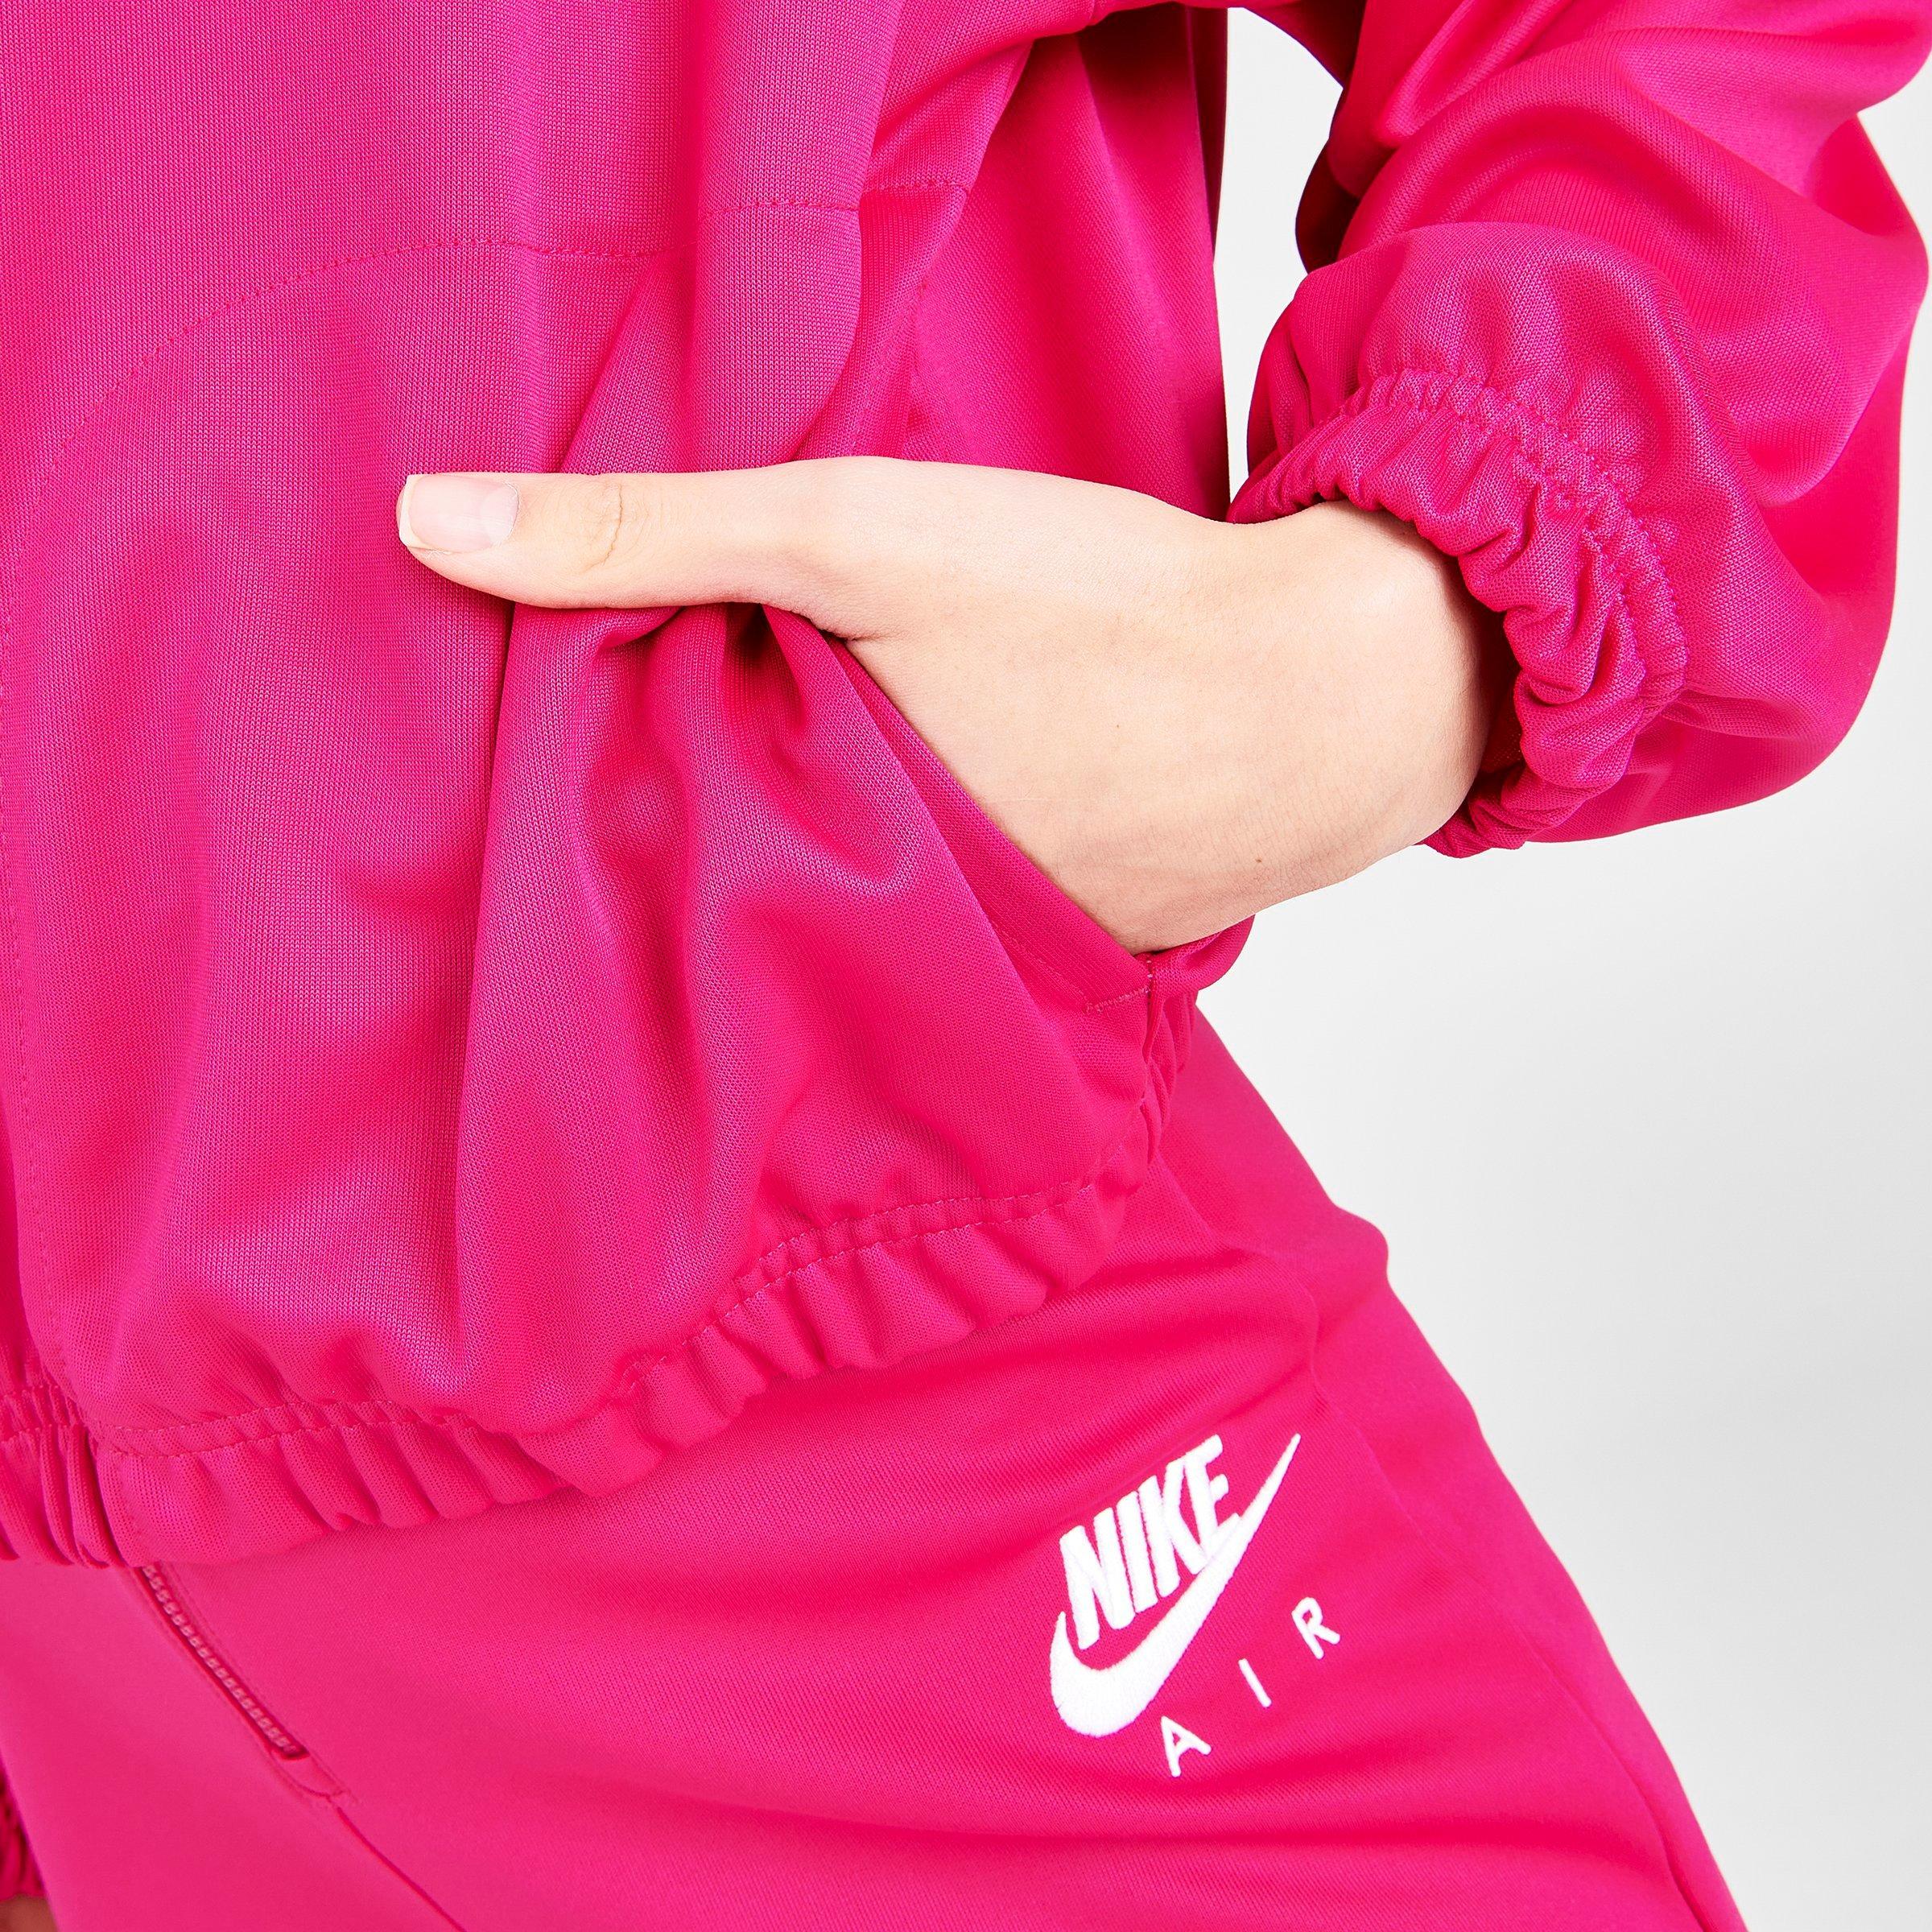 Women's Nike Air Quarter-Zip Sweatshirt 